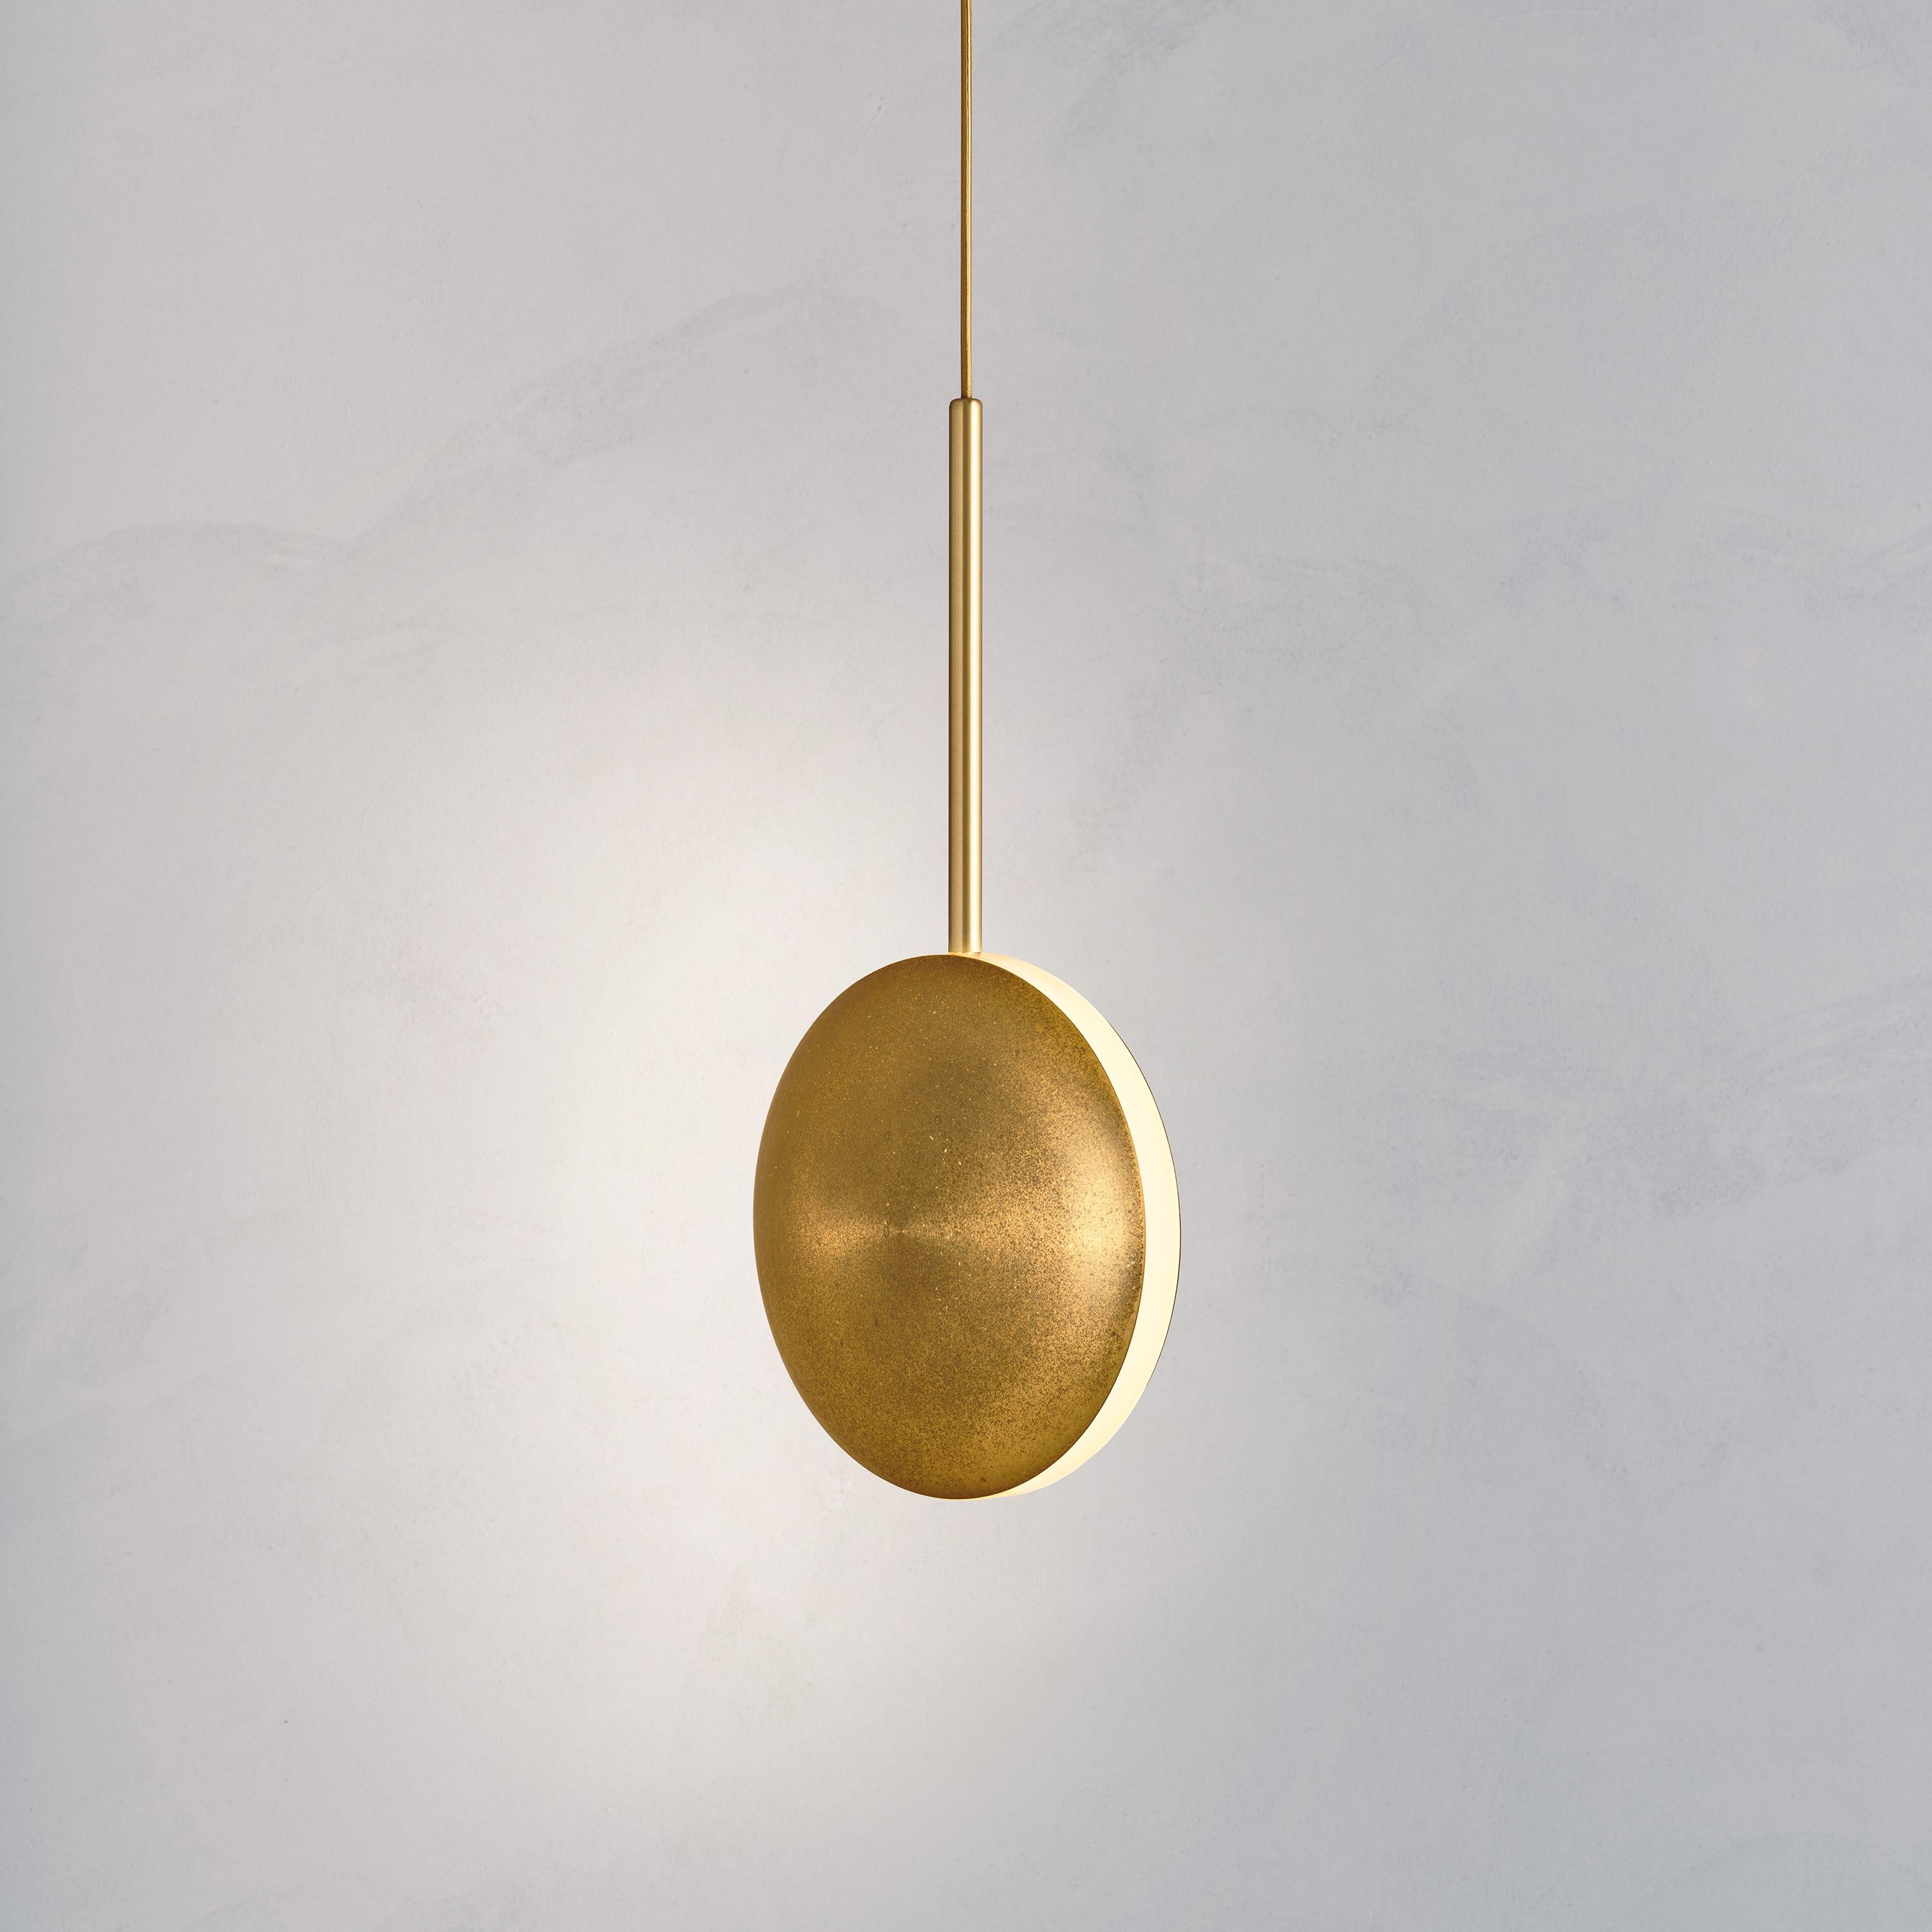 Organic Modern Cosmic 'Comet Pendant Oxidium' Handmade Oxidised Patinated Brass Ceiling Pendant For Sale